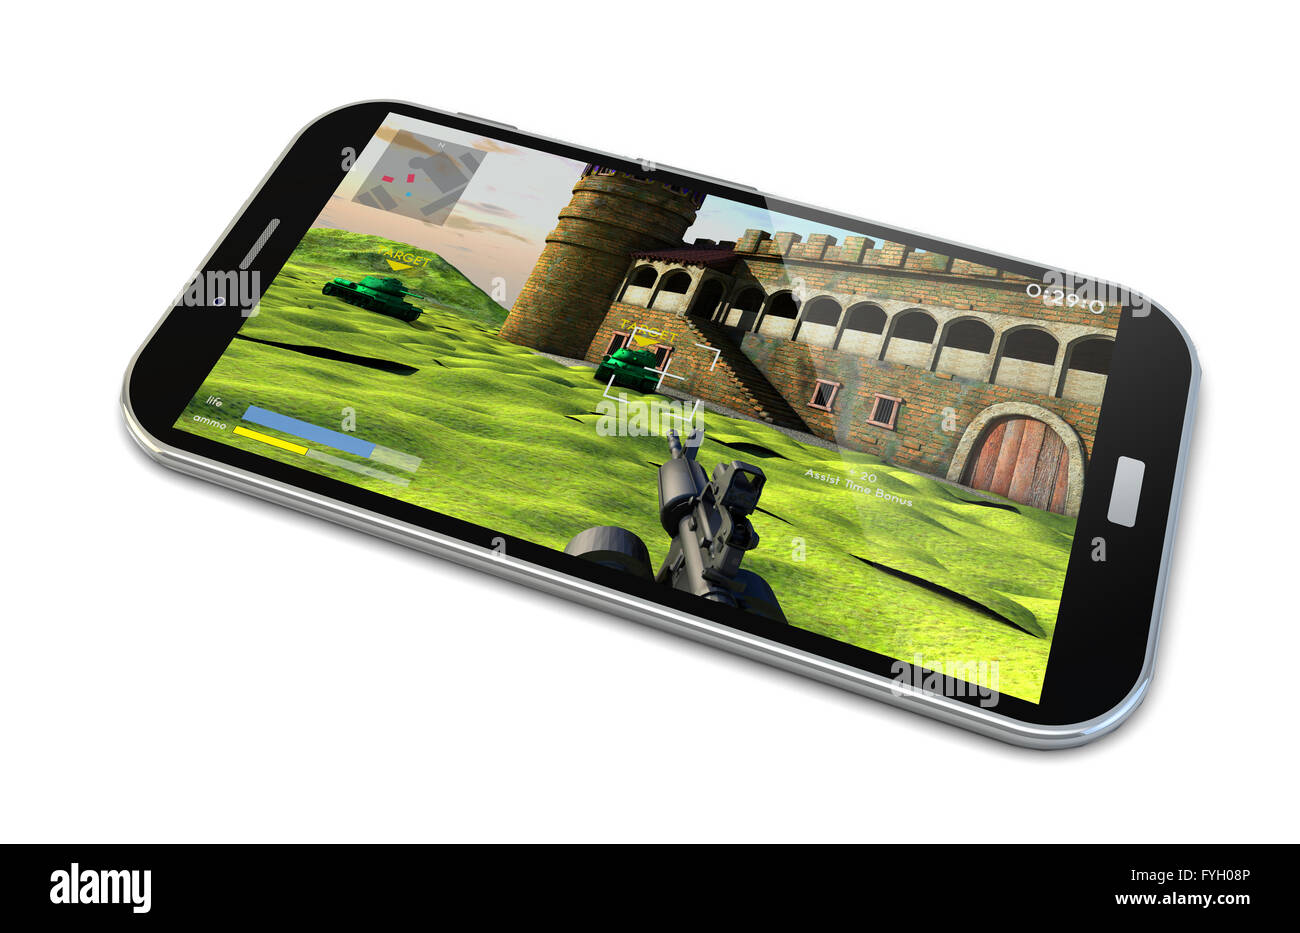 Le rendu d'un smartphone avec un jeu de tir à l'écran Banque D'Images